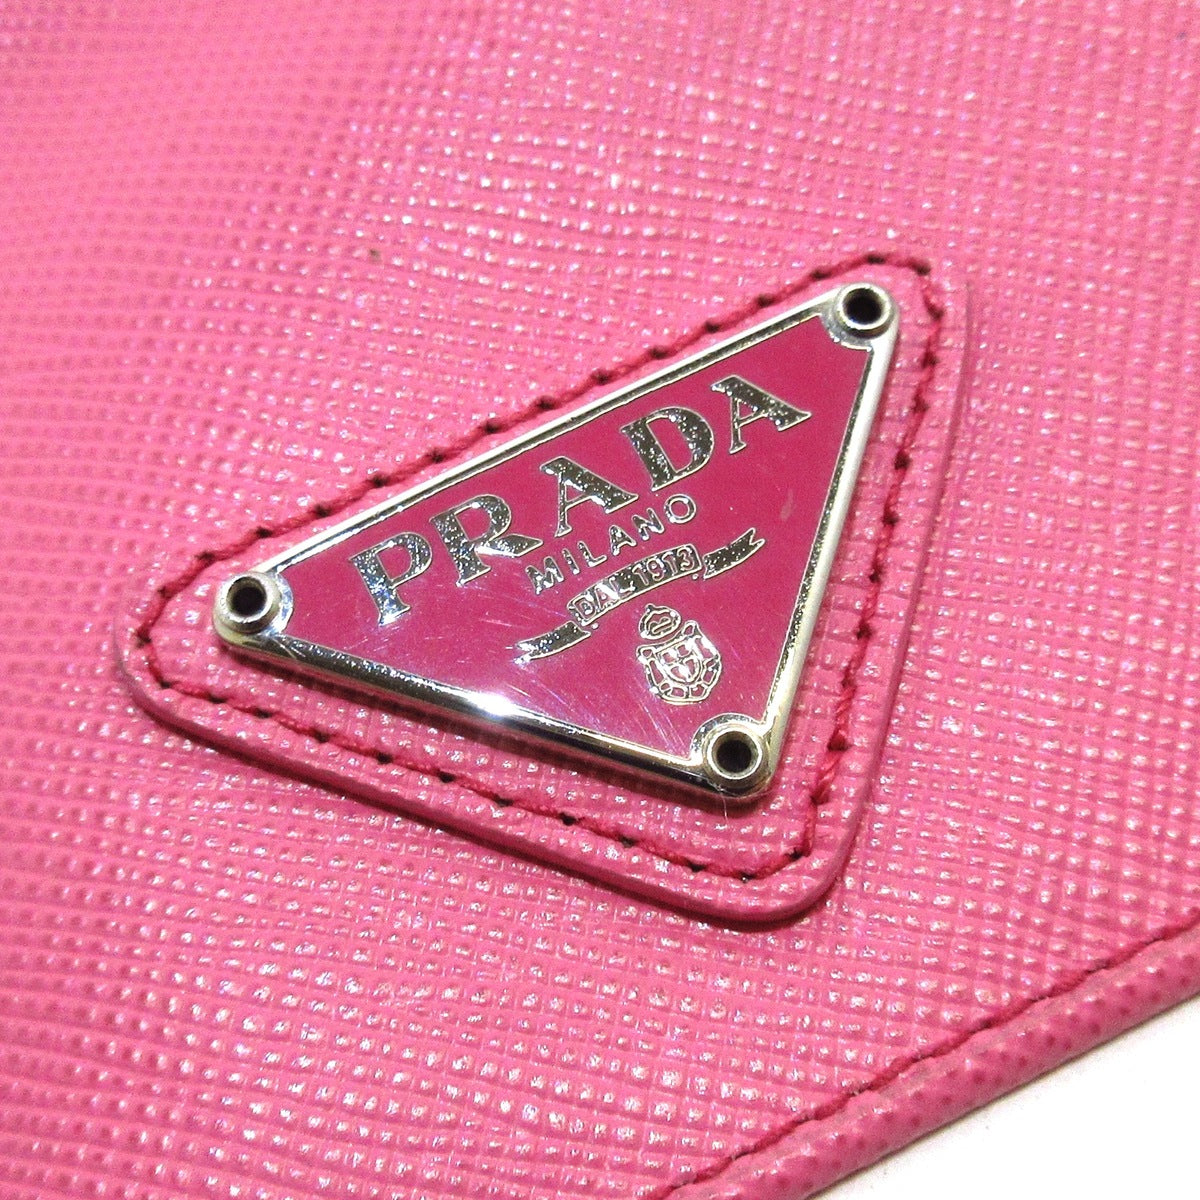 PRADA - Long Wallet Pink Saffiano Leather